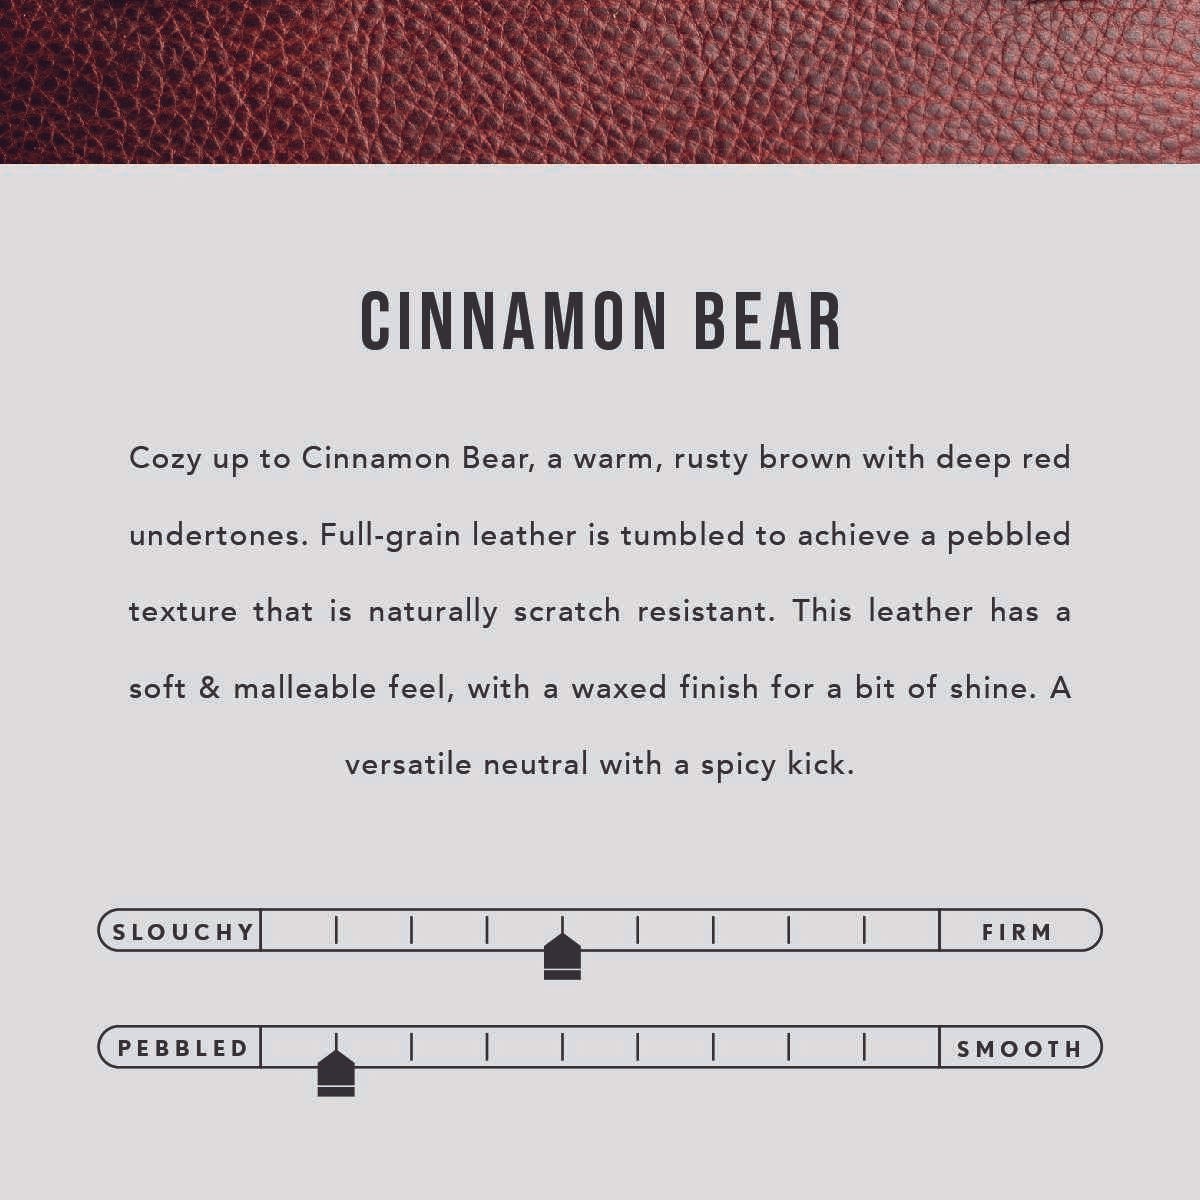 Cinnamon Bear | infographic